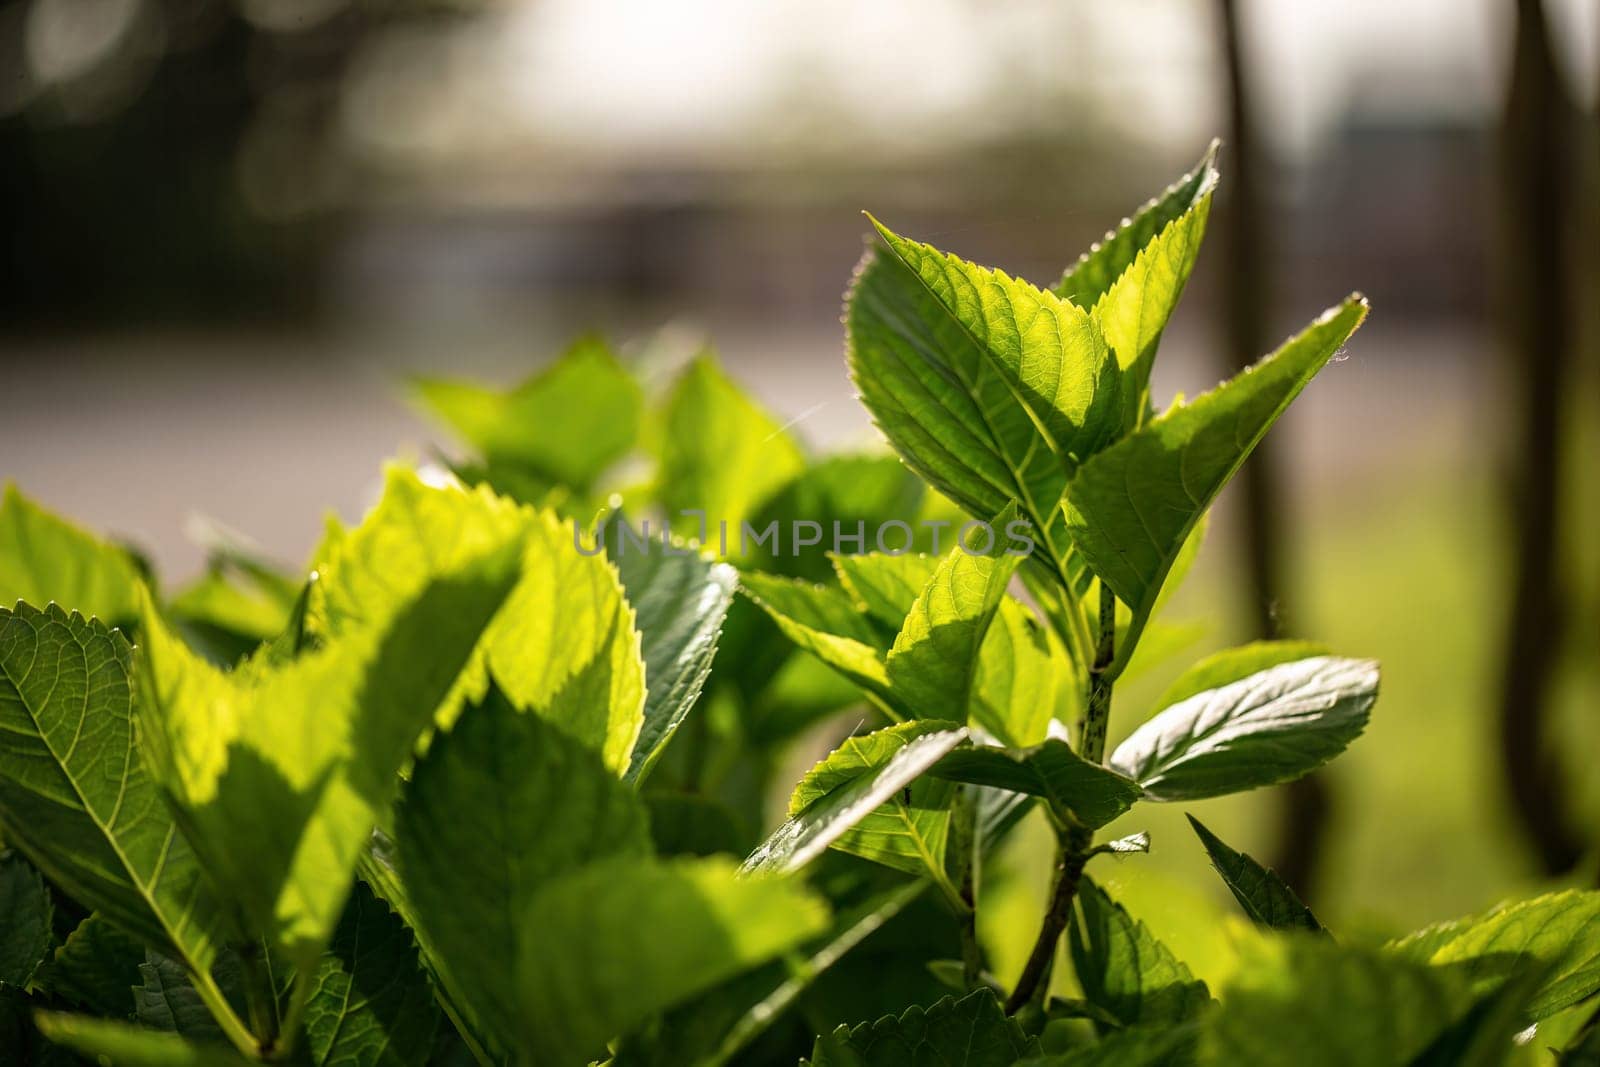 Verdant Velvet: A Close Up of Lush Green Leaves by pippocarlot